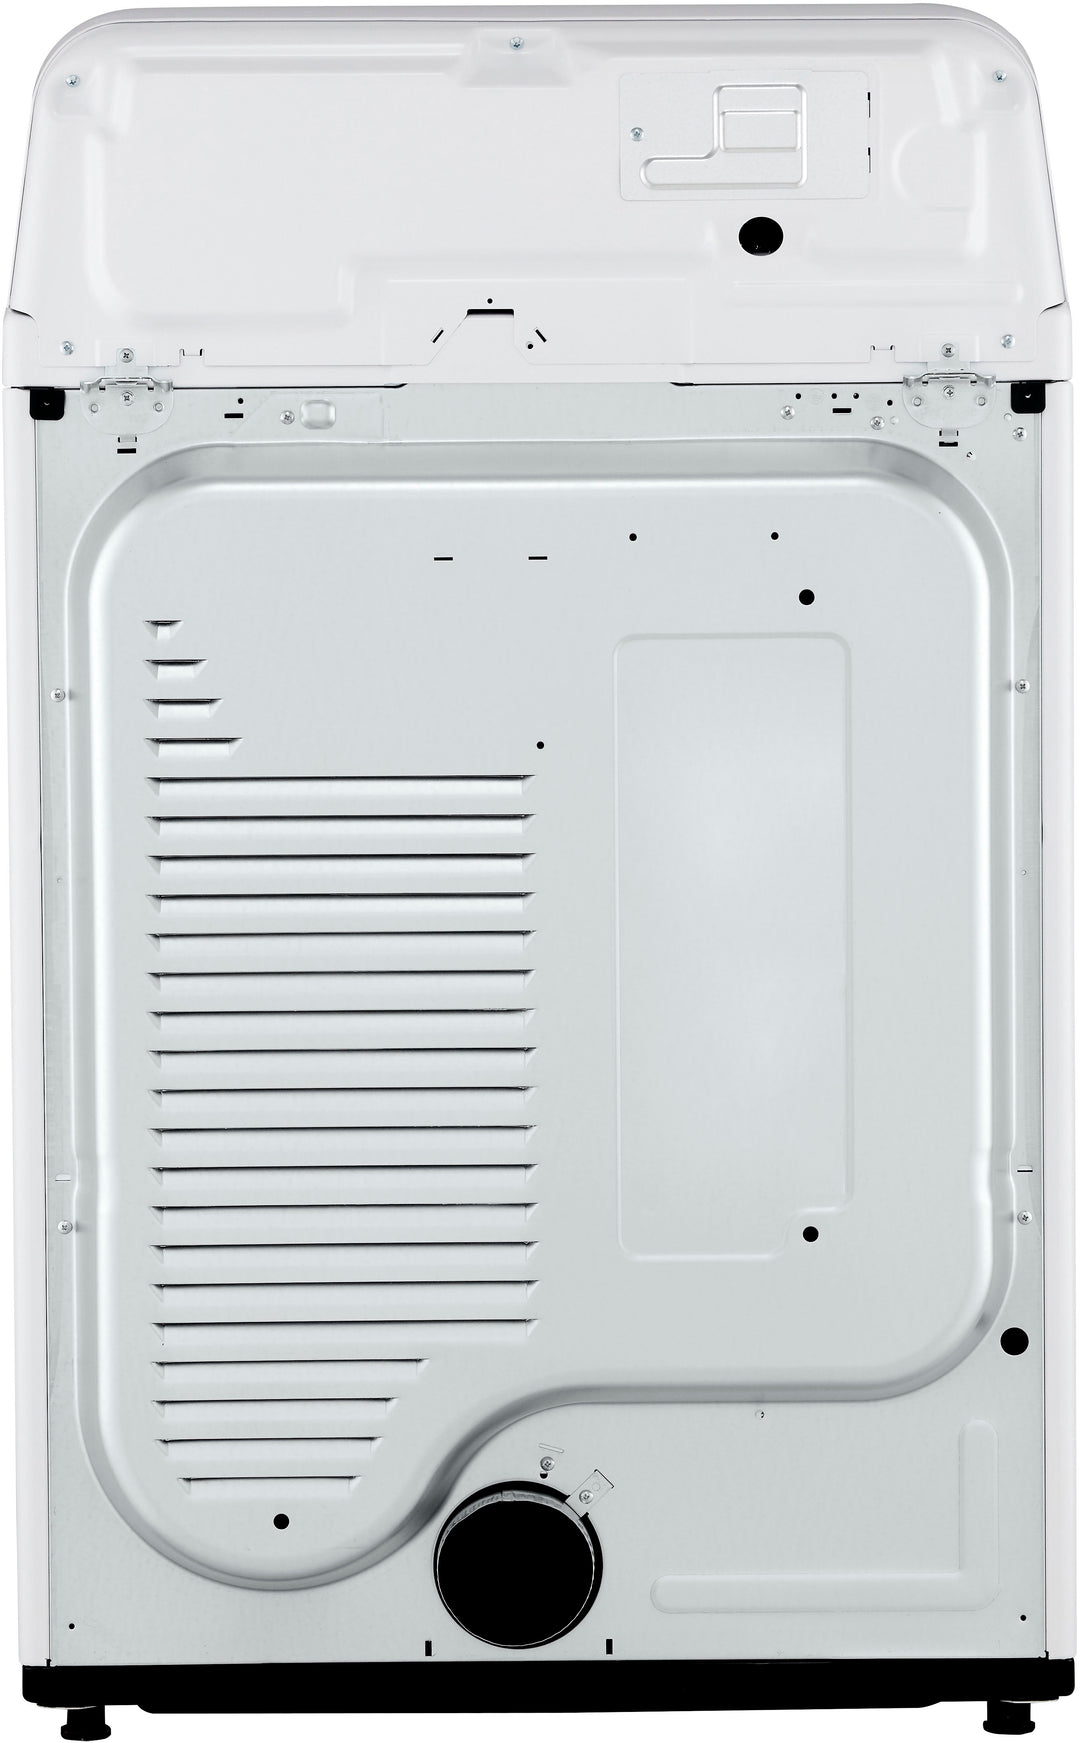 LG - 7.3 Cu. Ft. Smart Electric Dryer with EasyLoad Door - White_14